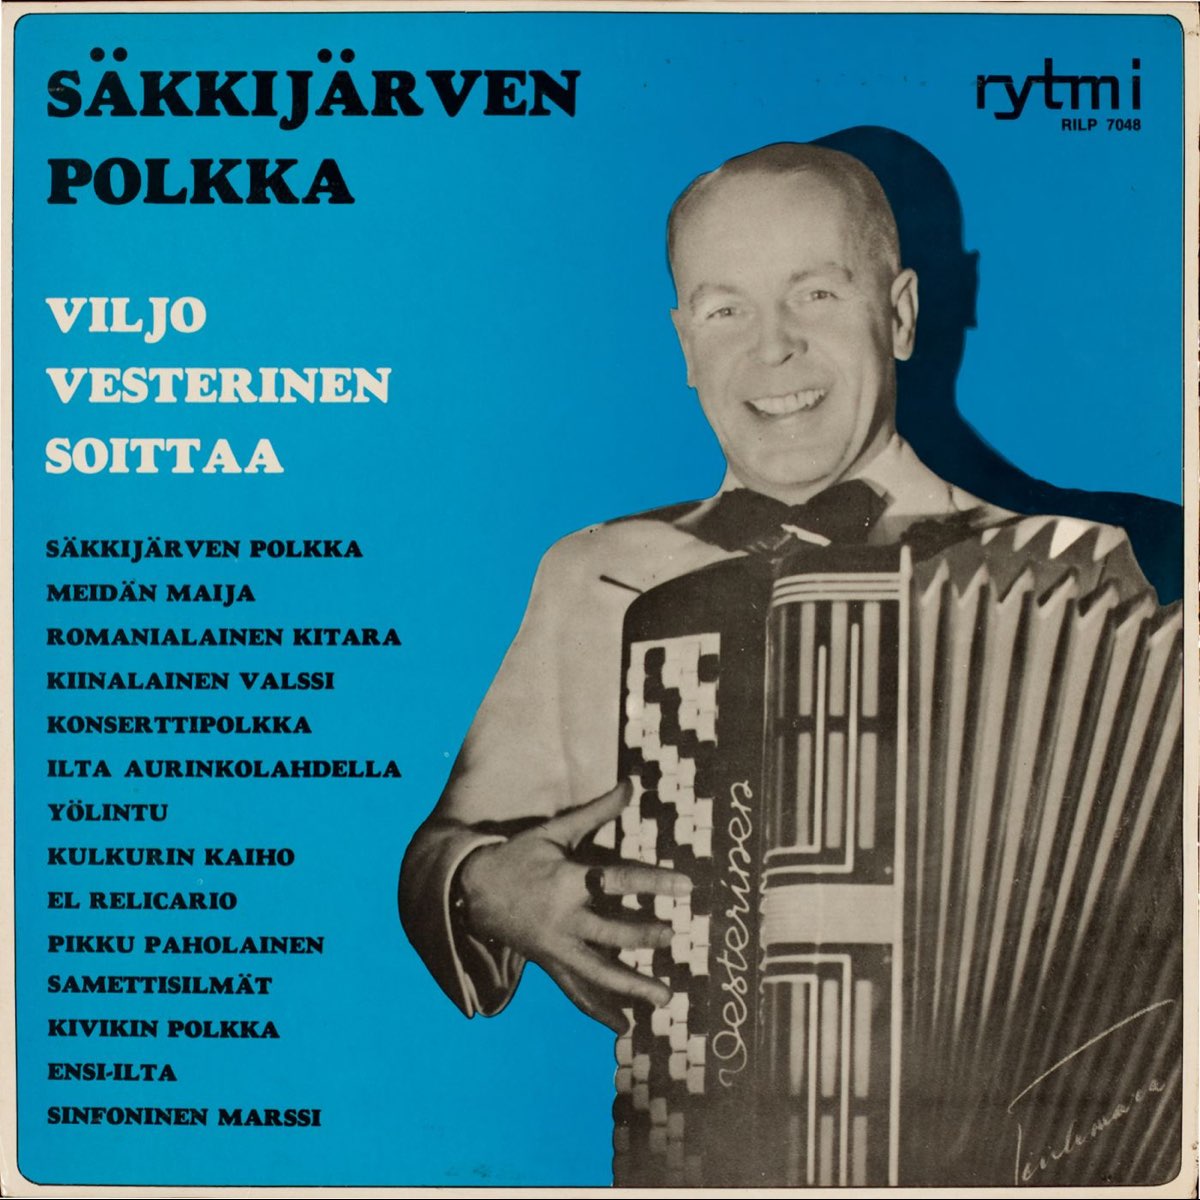 Säkkijärven polkka - Album by Viljo Vesterinen - Apple Music